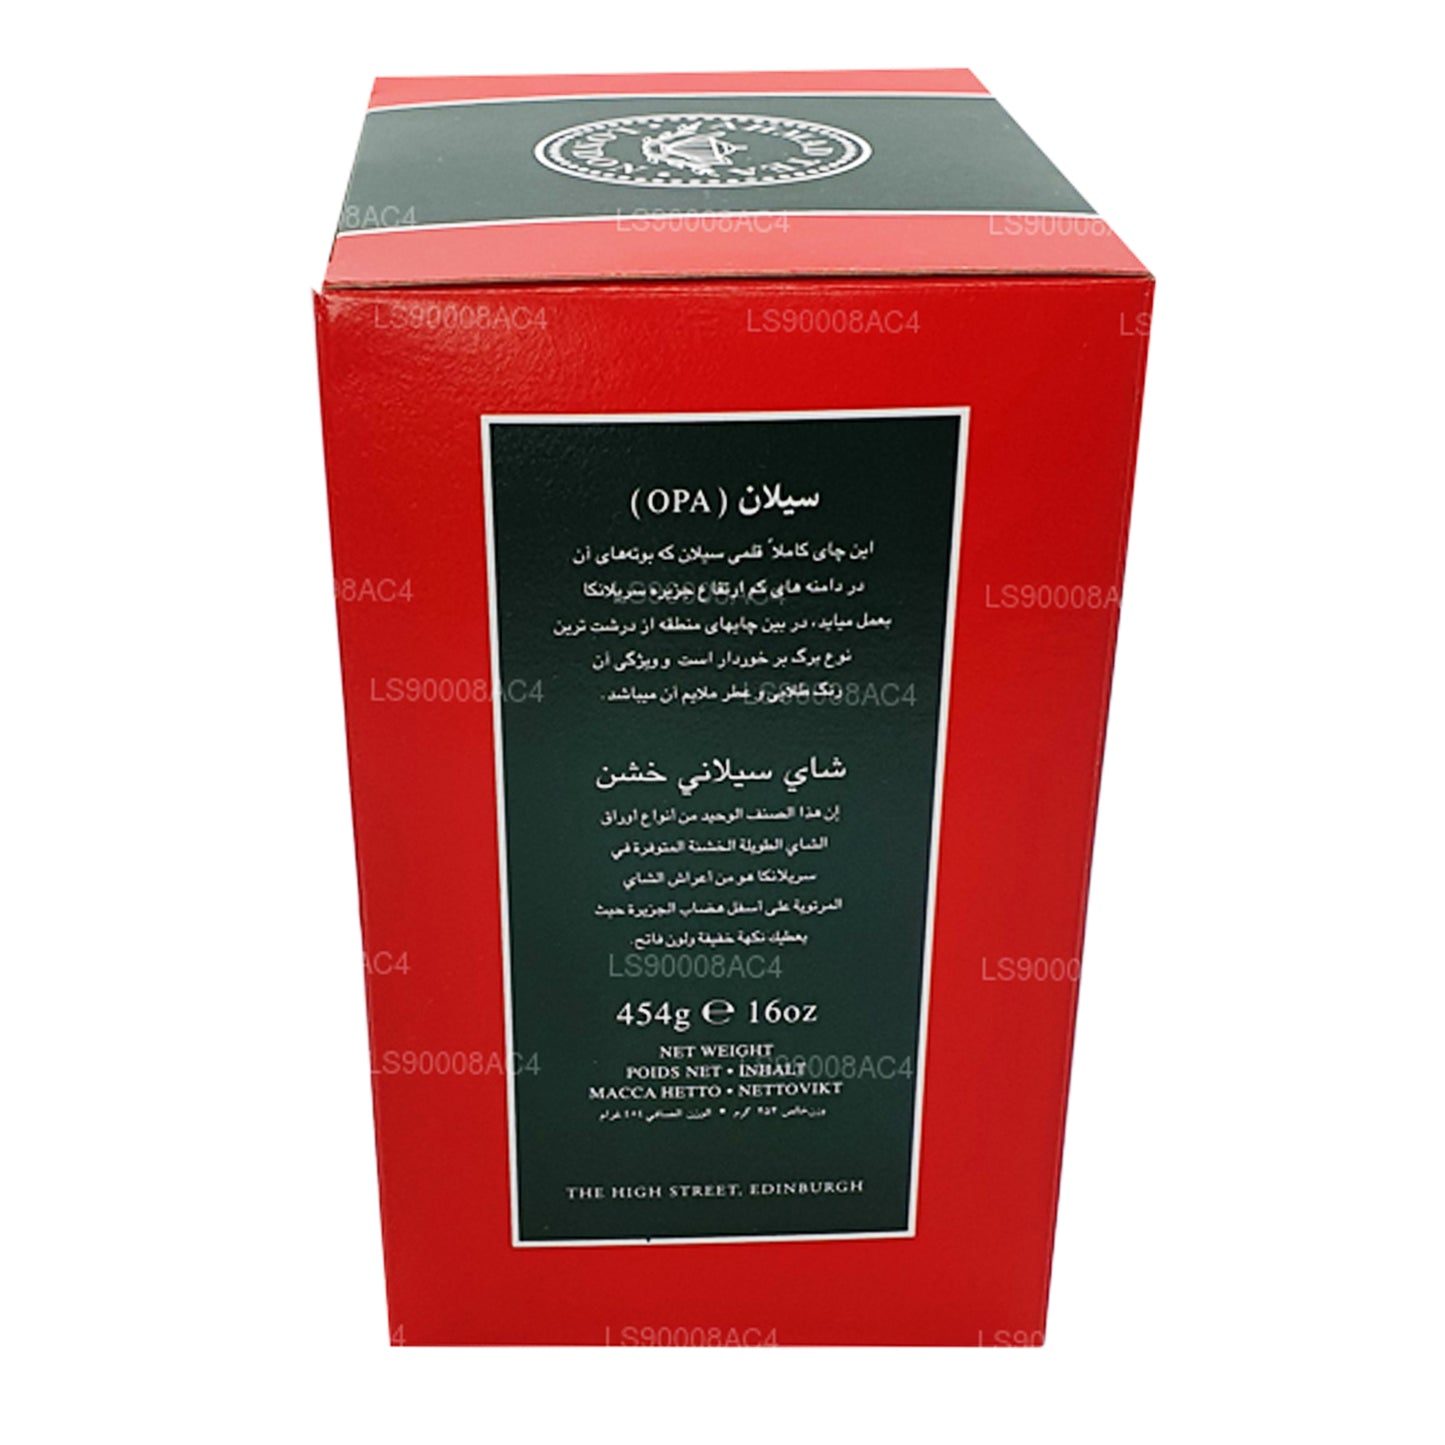 Ahmad Tea Ceylon OPA Loose Tea Carton (454g)